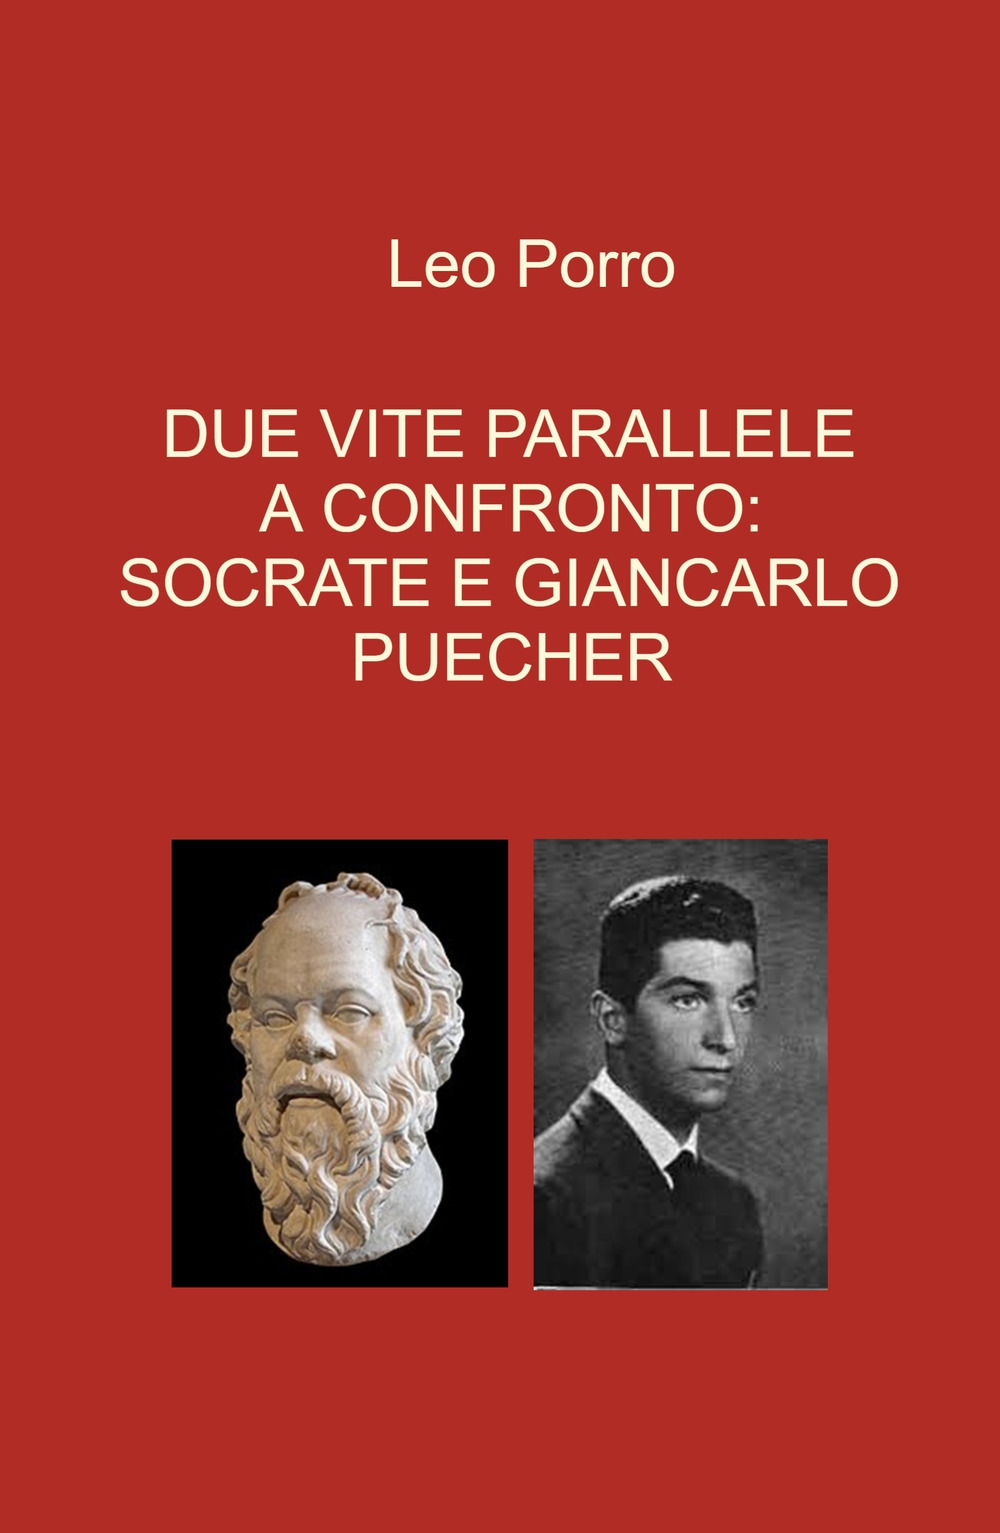 Due vite parallele a confronto: Socrate e Giancarlo Puecher